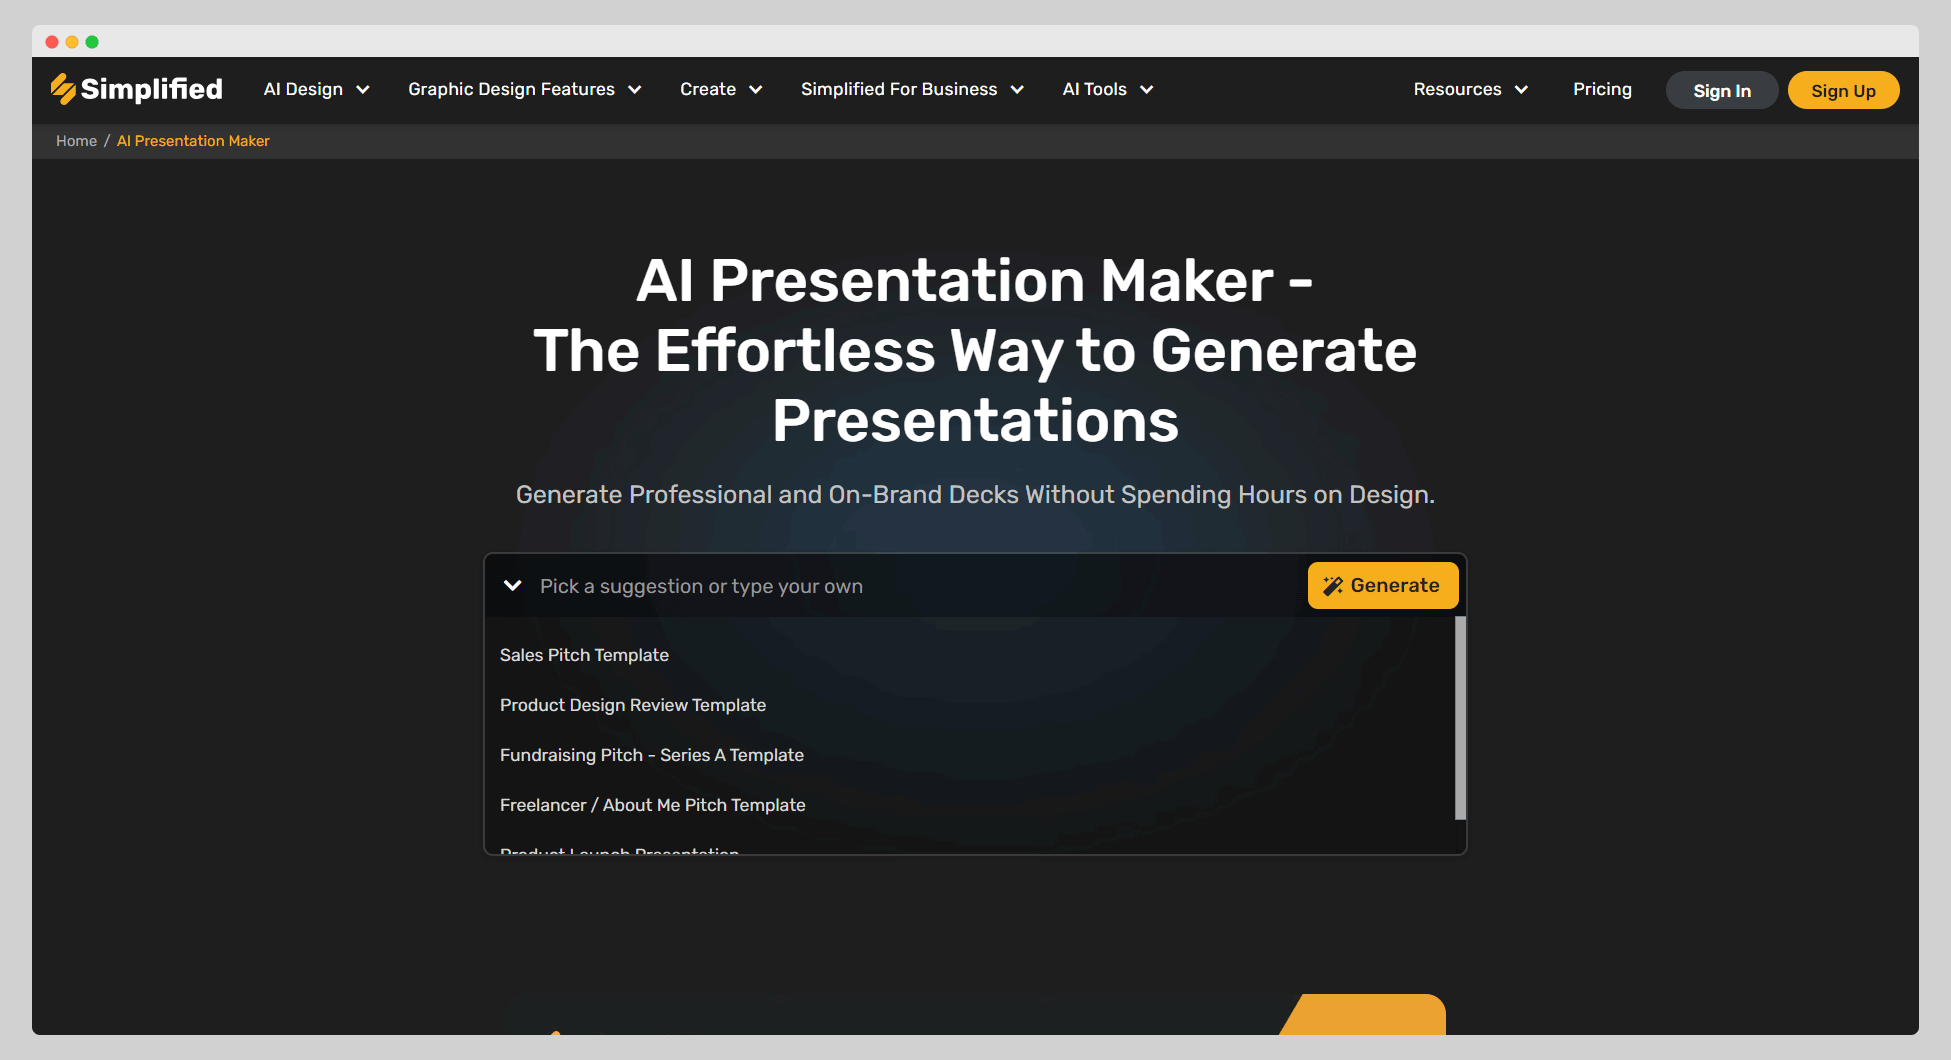 Simplified - AI Presentation Maker